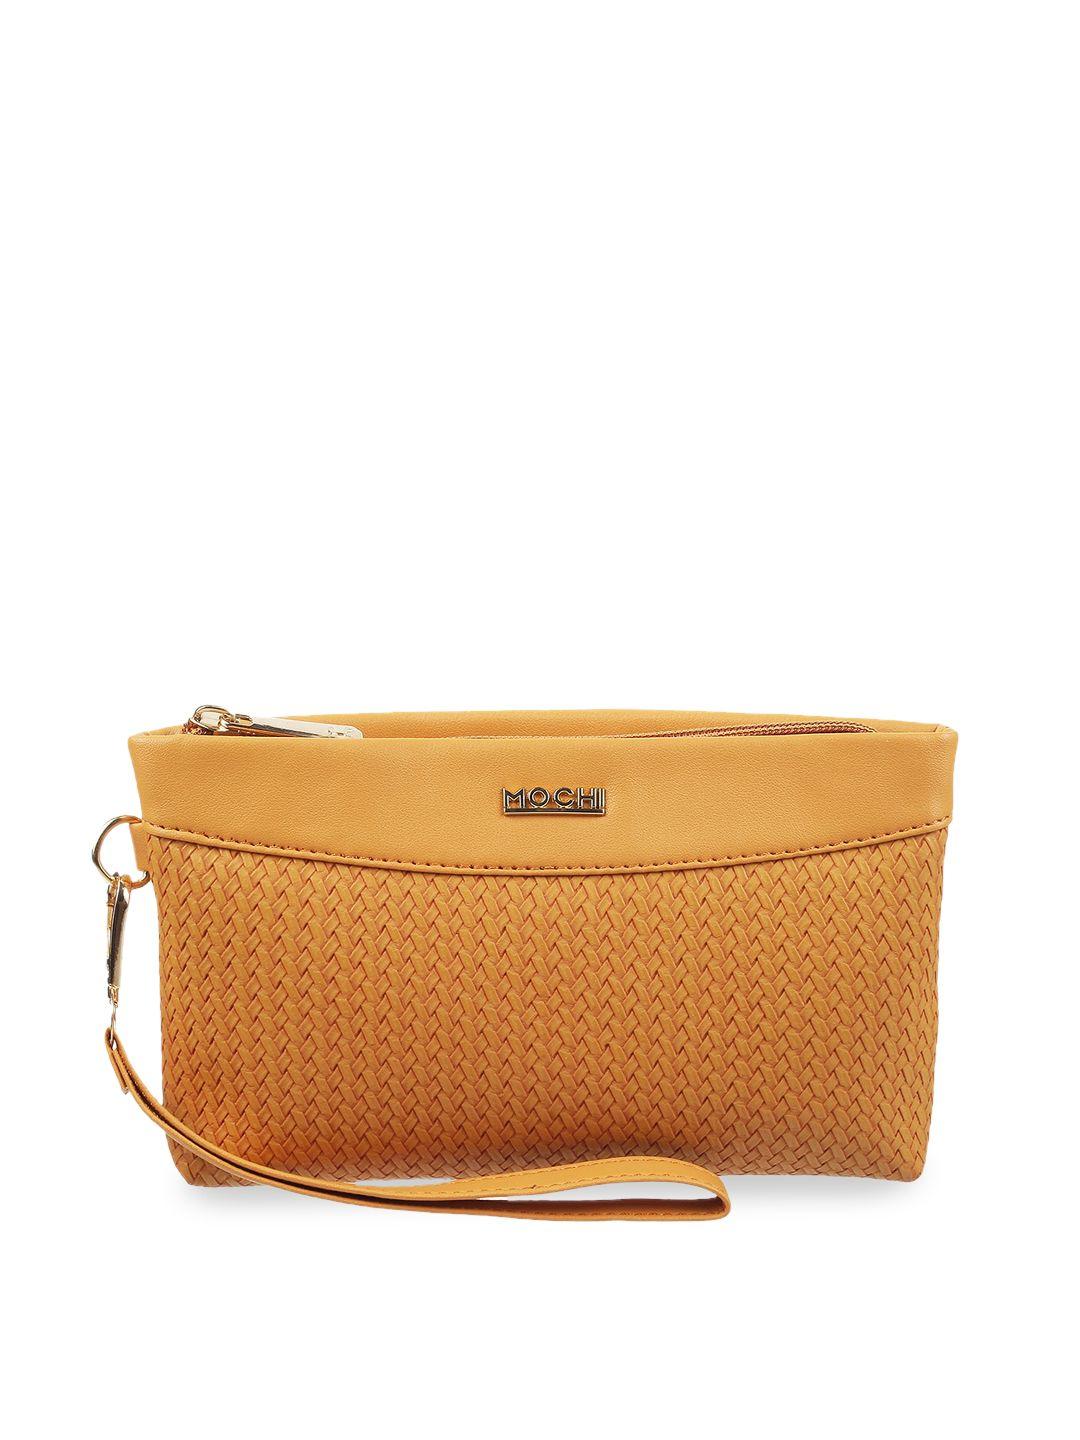 mochi yellow textured purse clutch